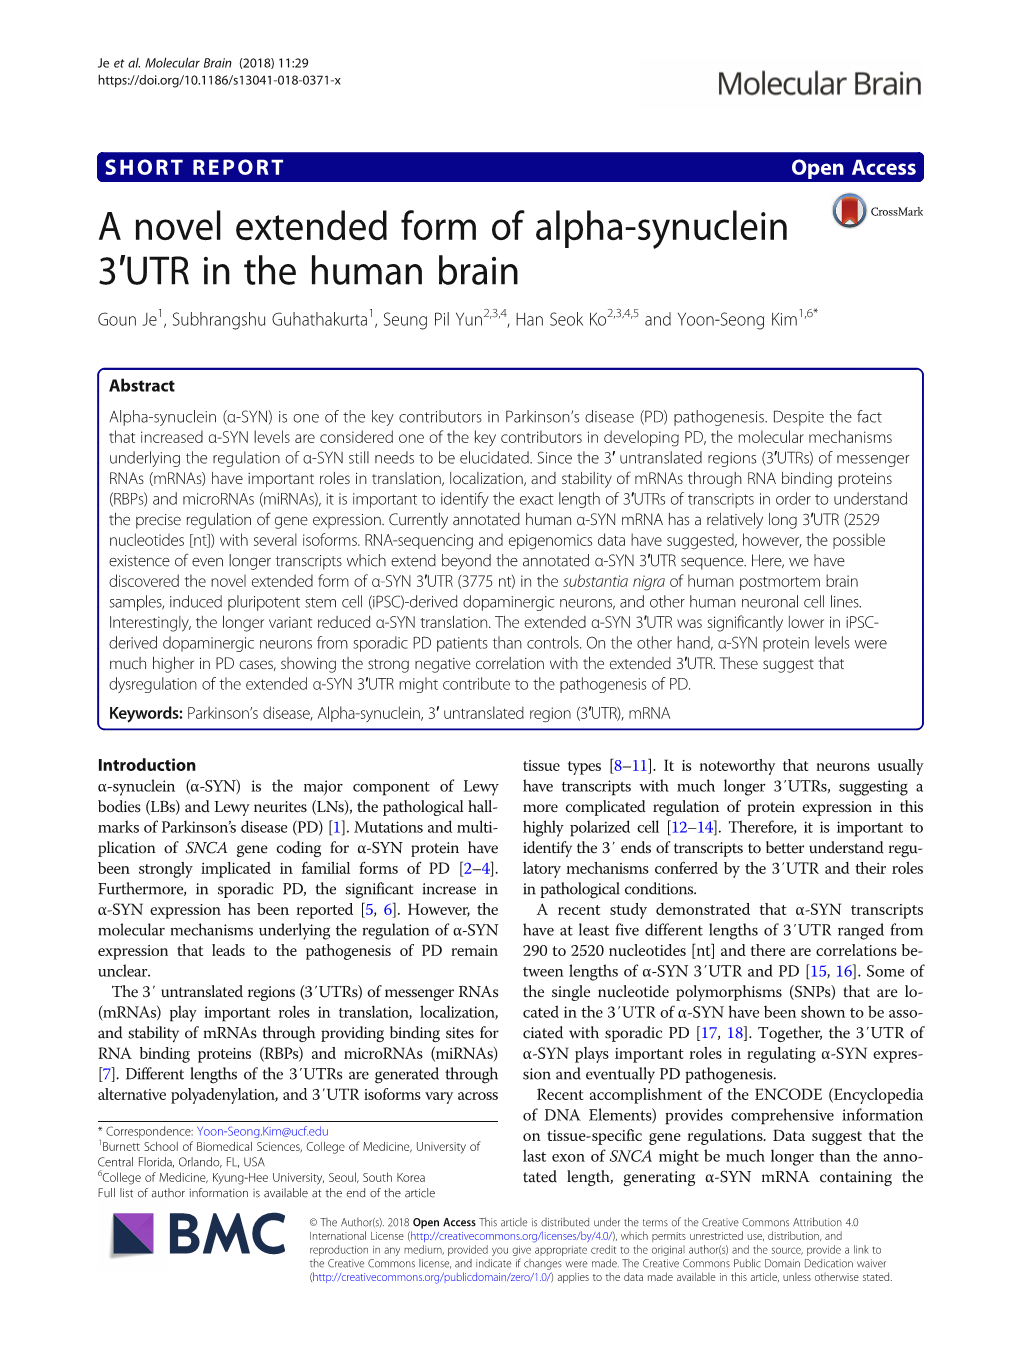 A Novel Extended Form of Alpha-Synuclein 3′UTR in the Human Brain Goun Je1, Subhrangshu Guhathakurta1, Seung Pil Yun2,3,4, Han Seok Ko2,3,4,5 and Yoon-Seong Kim1,6*